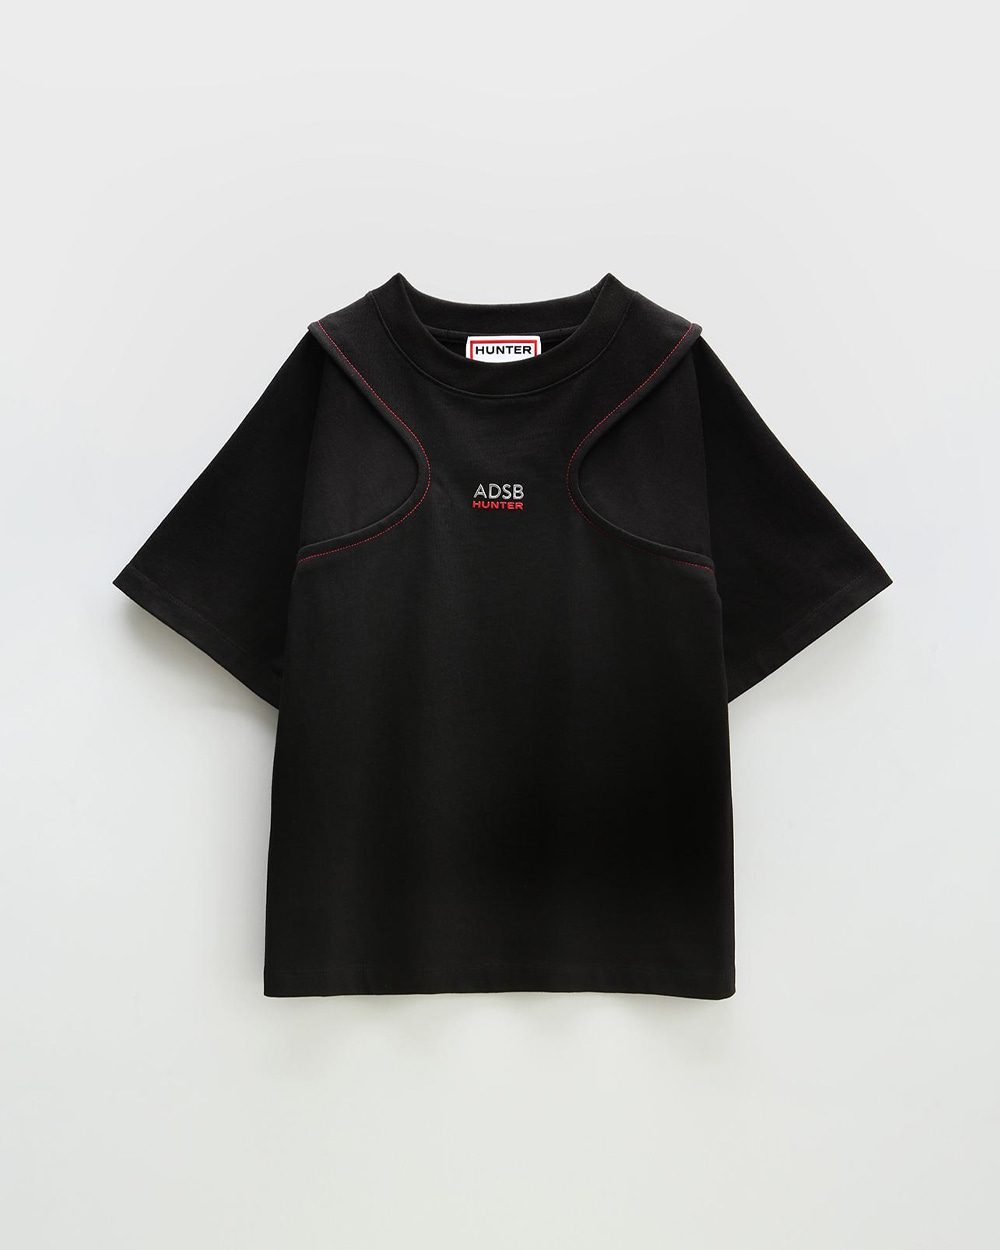 [UNISEX] HUNTER X ADSB 하네스 로고 티셔츠 - 블랙 HA10008ATBLK